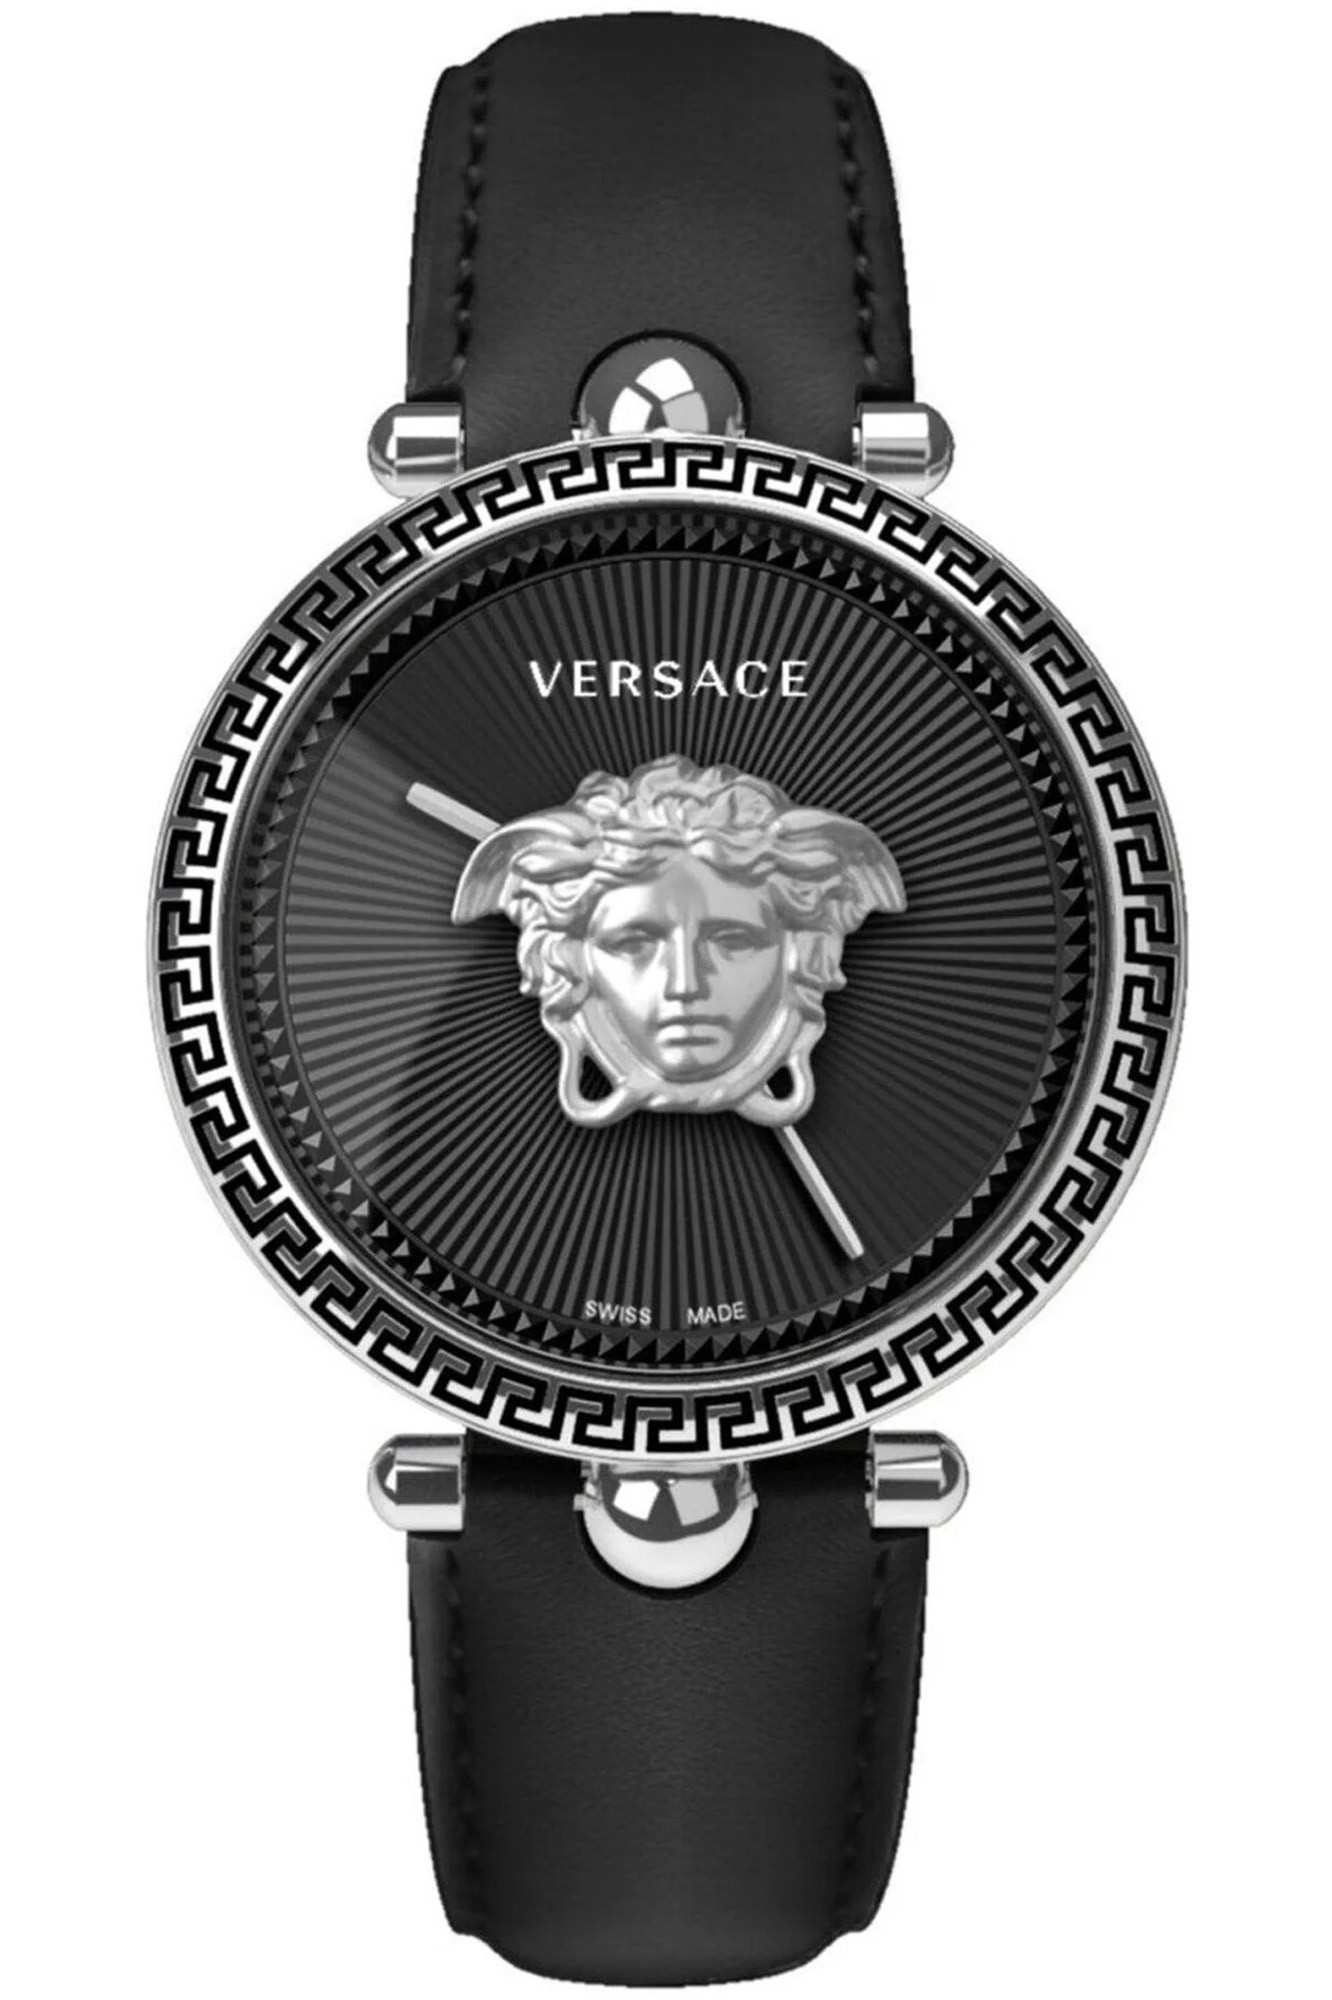 Reloj Versace veco01622